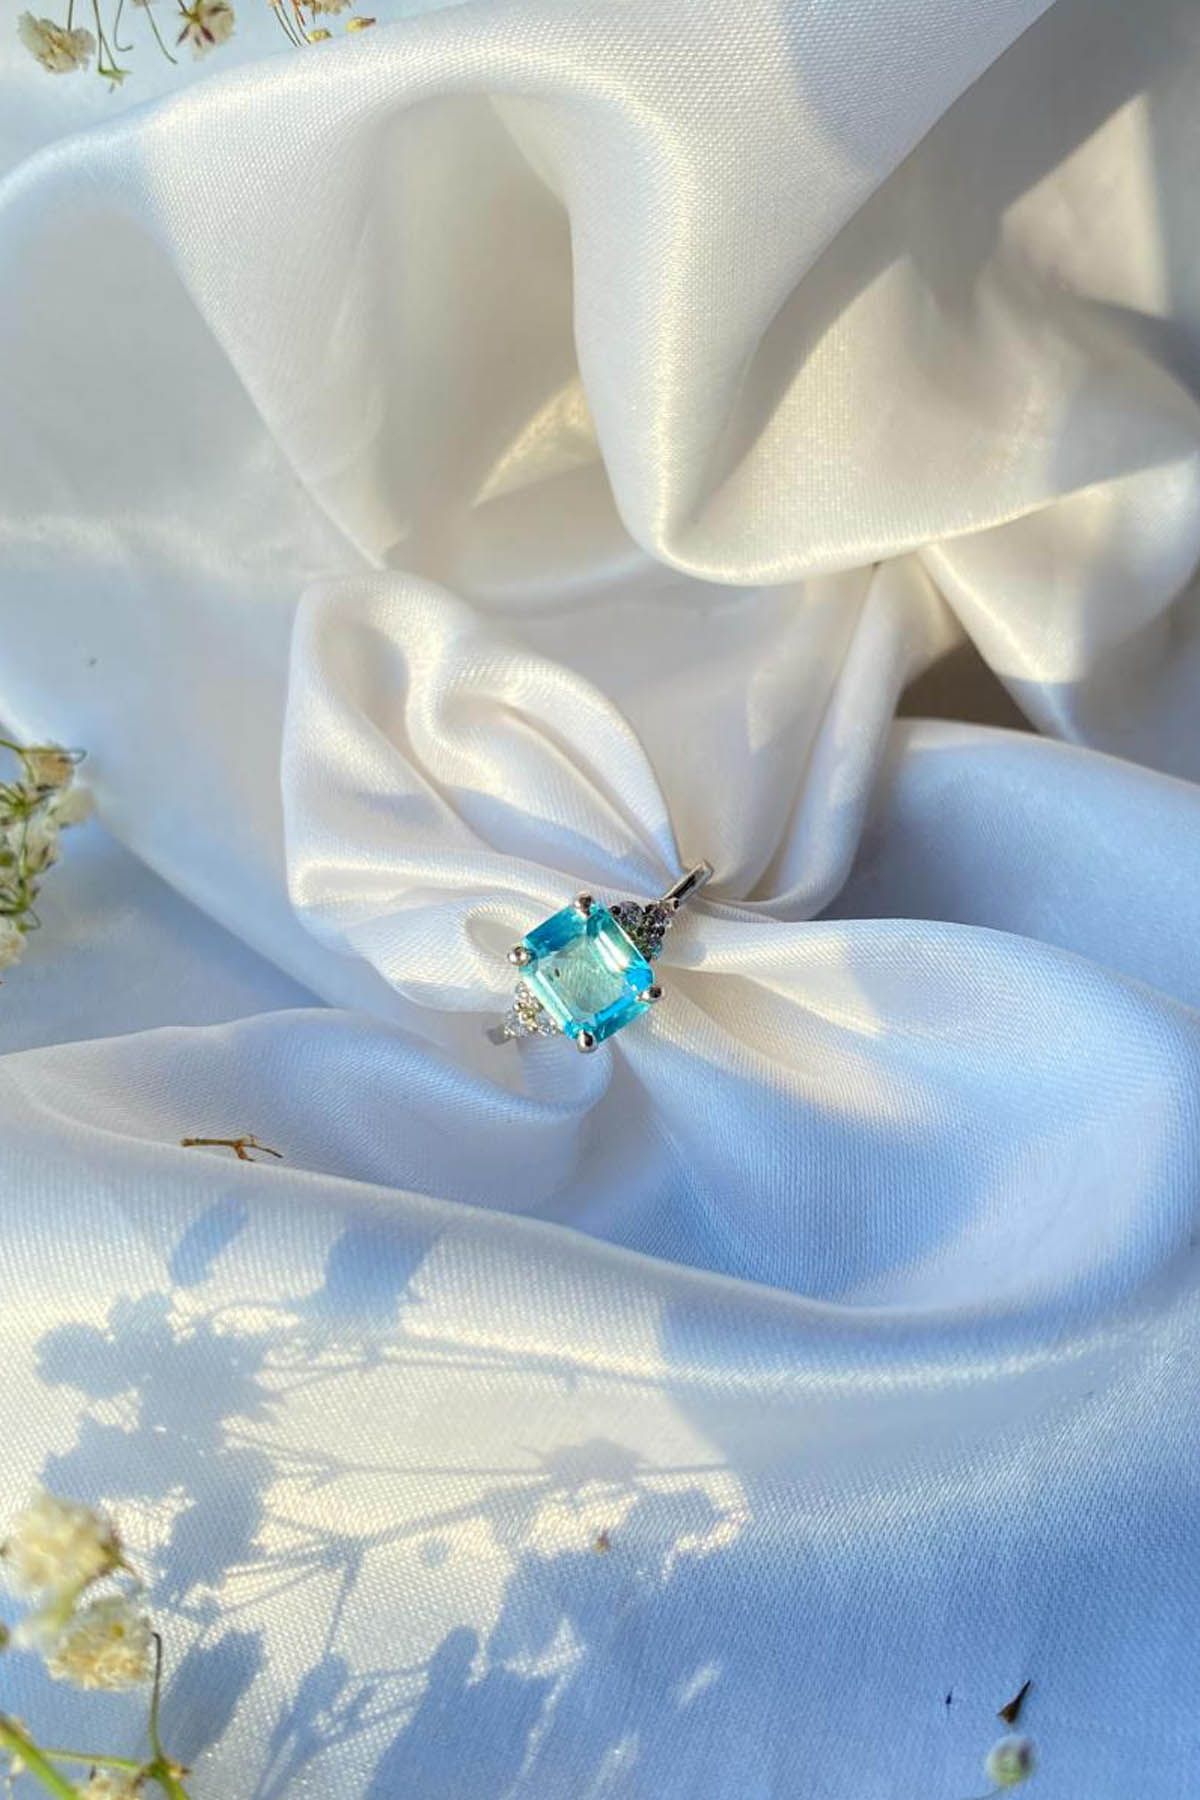 Princess Diana Aquamarine Ring Meghan Markle Cocktail Ring - Etsy